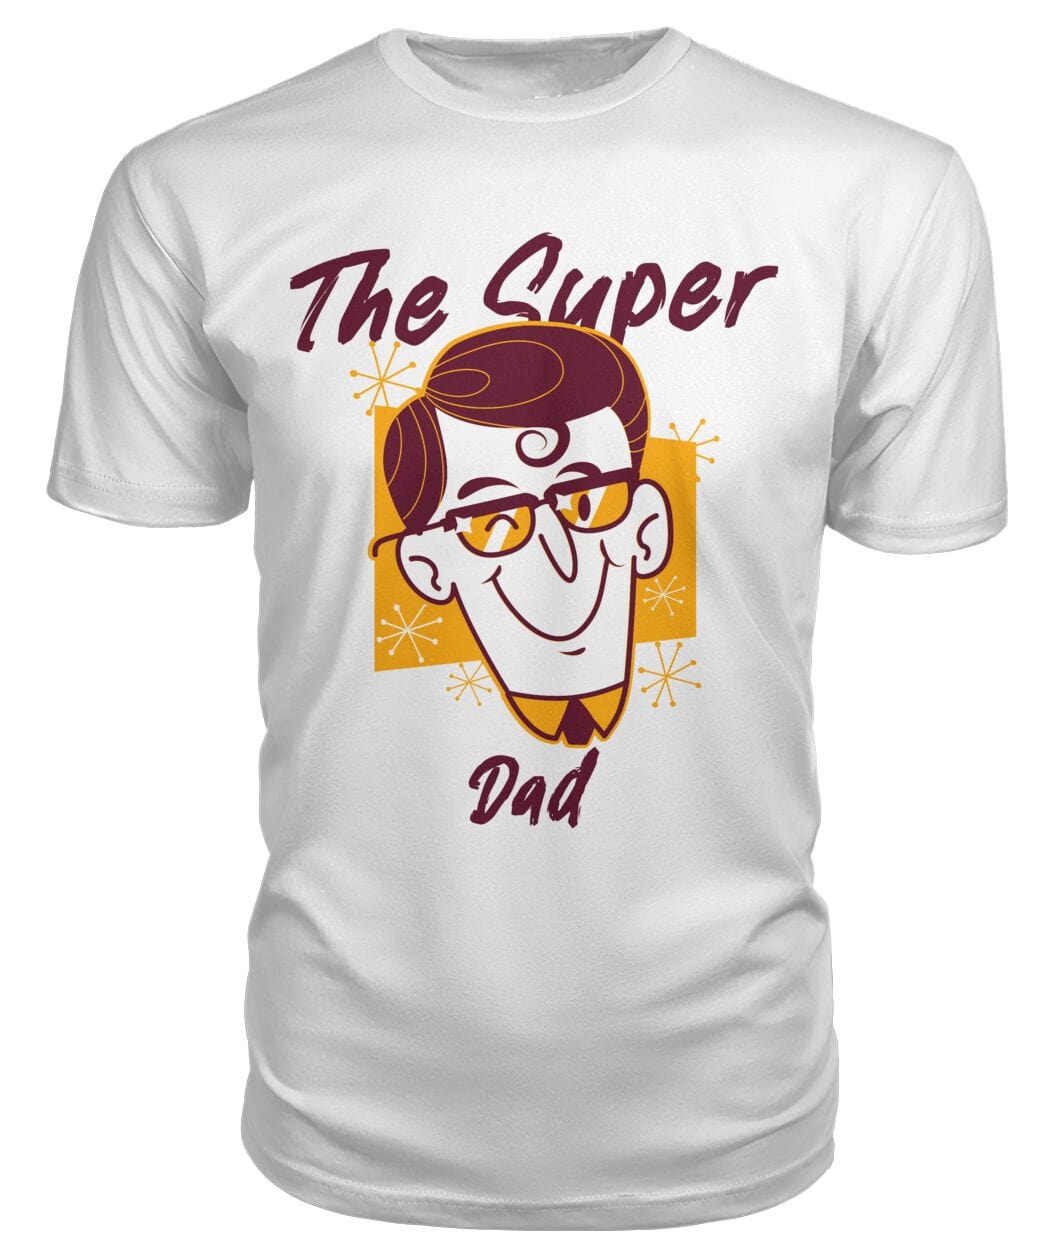 The super dad